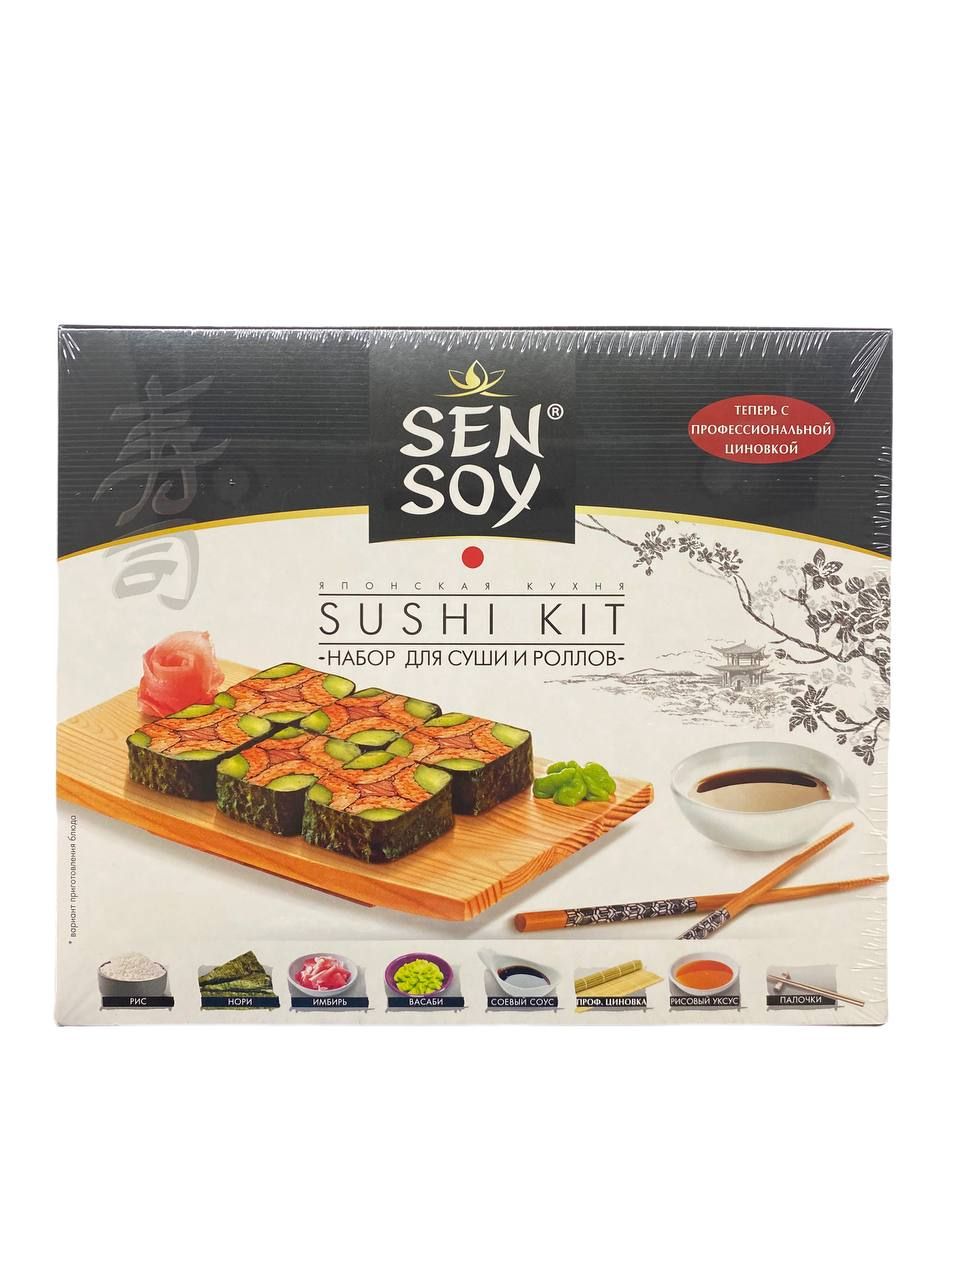 Sen soy набор для суши цена фото 10